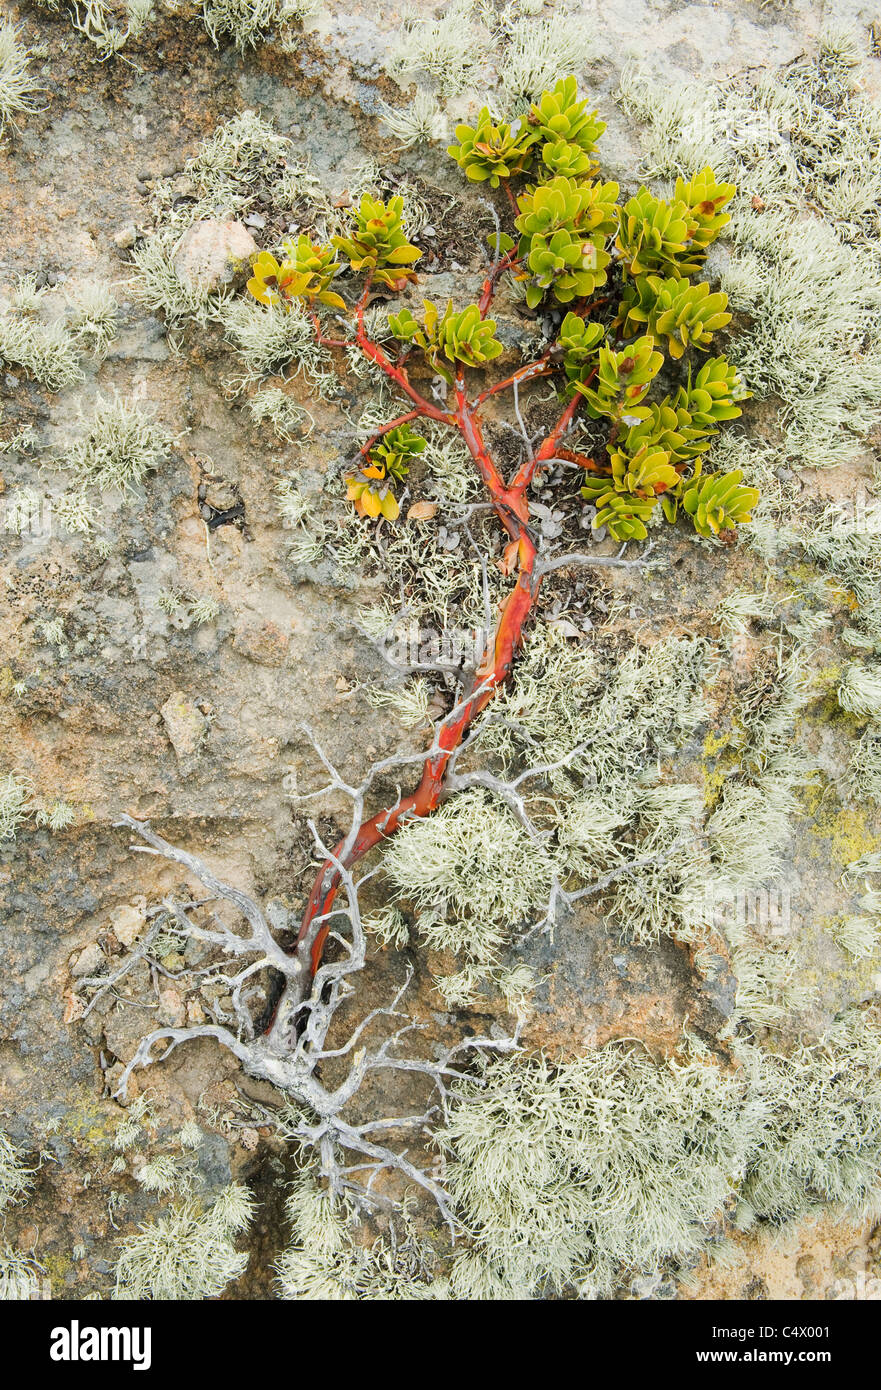 Manzanita and Lichens grow on barren rock slope, Santa Rosa Island, Channel Islands National Park, California Stock Photo